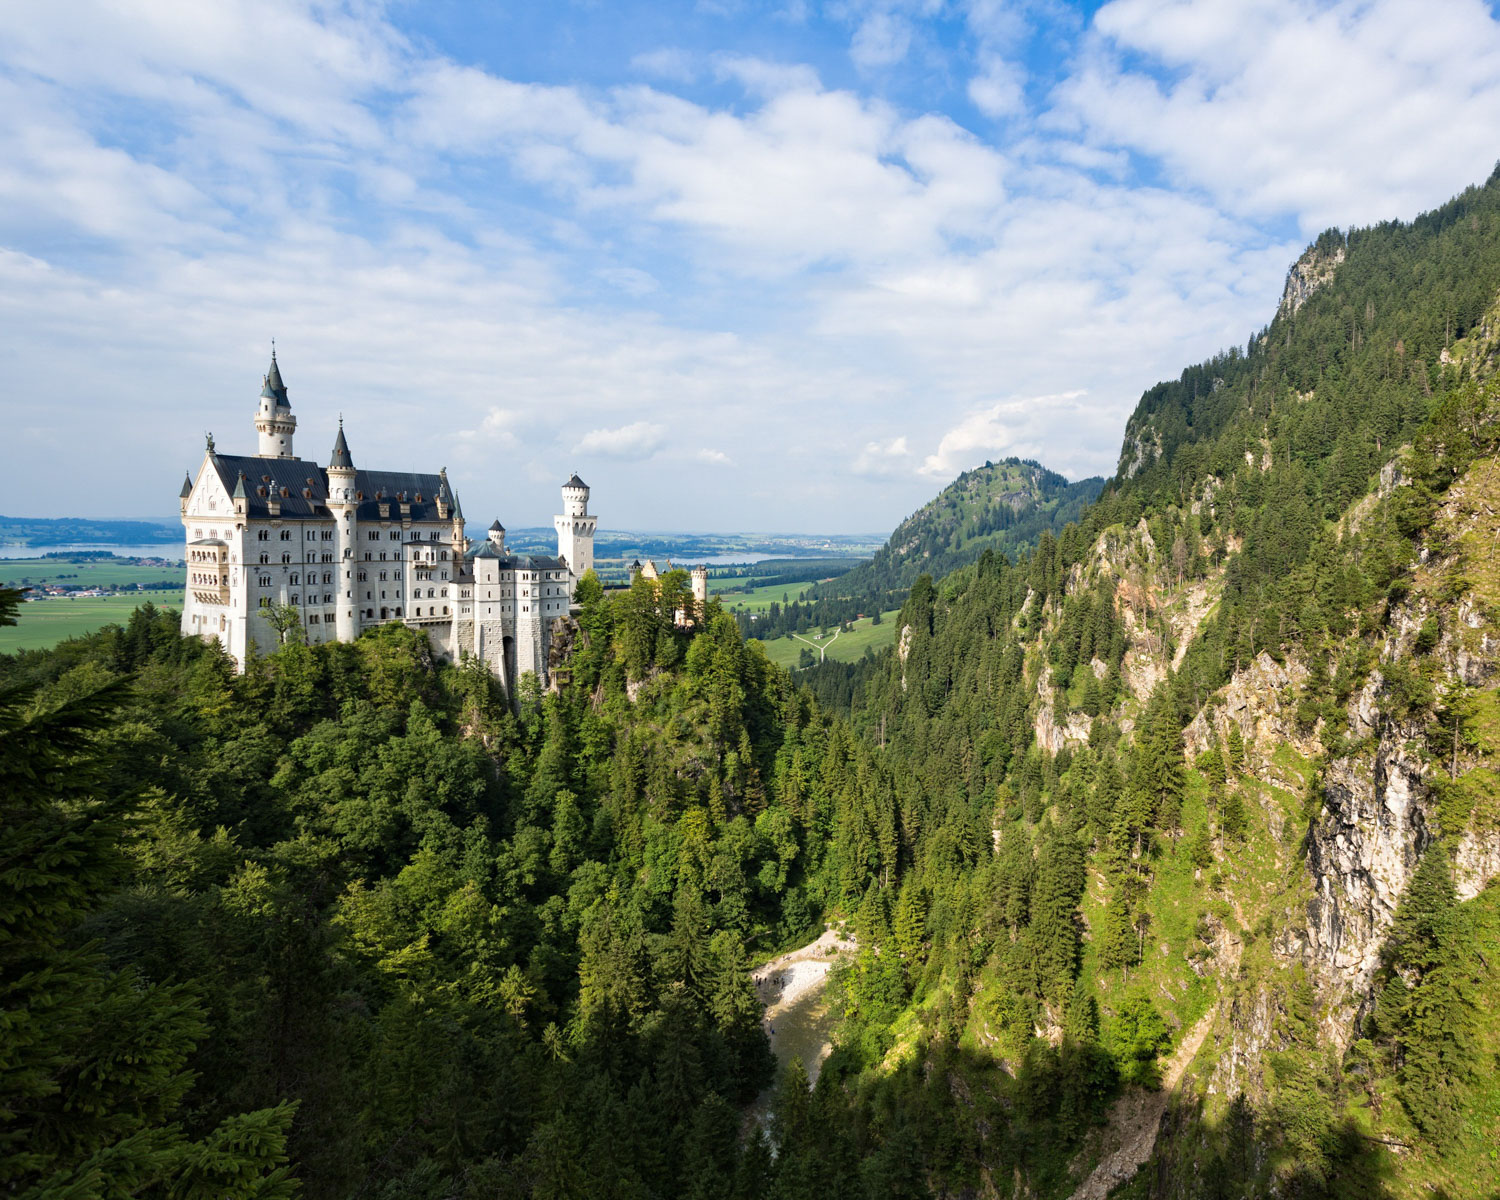 Neuschwanstein Castle in Germany Photo Iankelsall1 on Pixabay